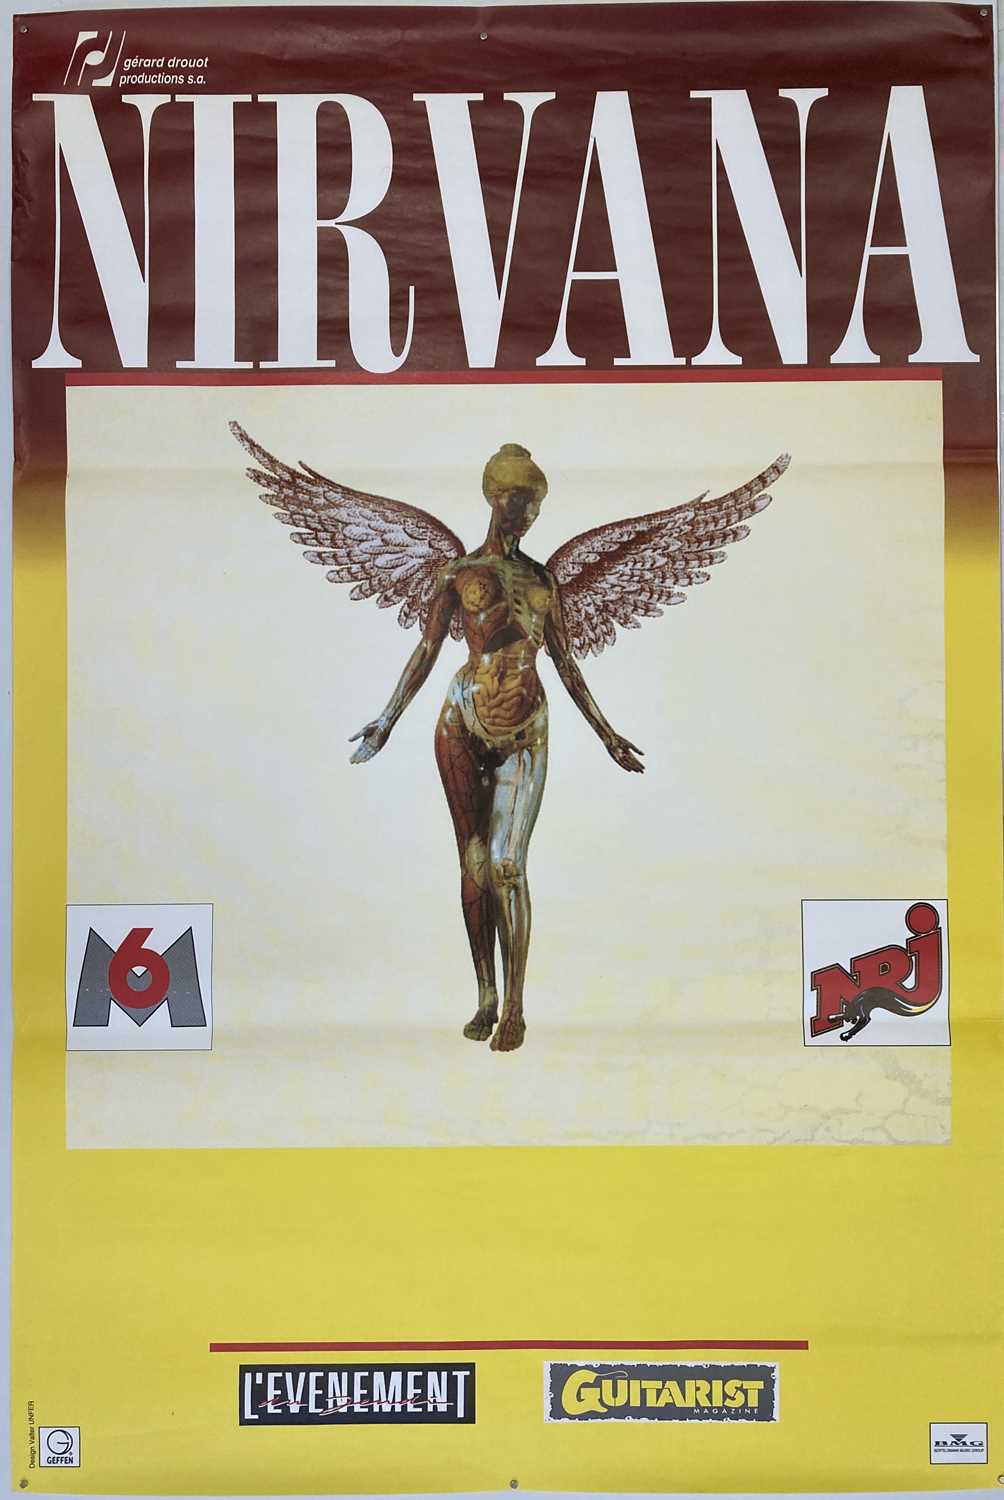 Nirvana – Last Ever Concert Poster